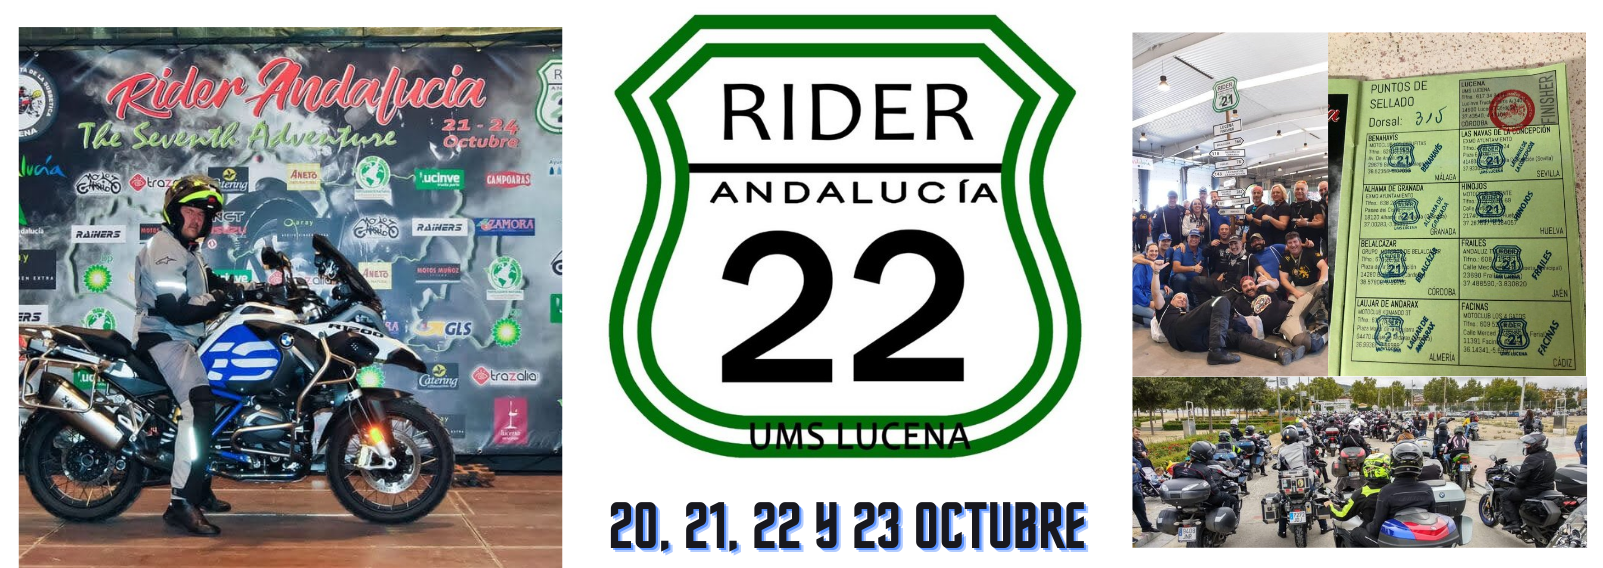 Rider Andalucía